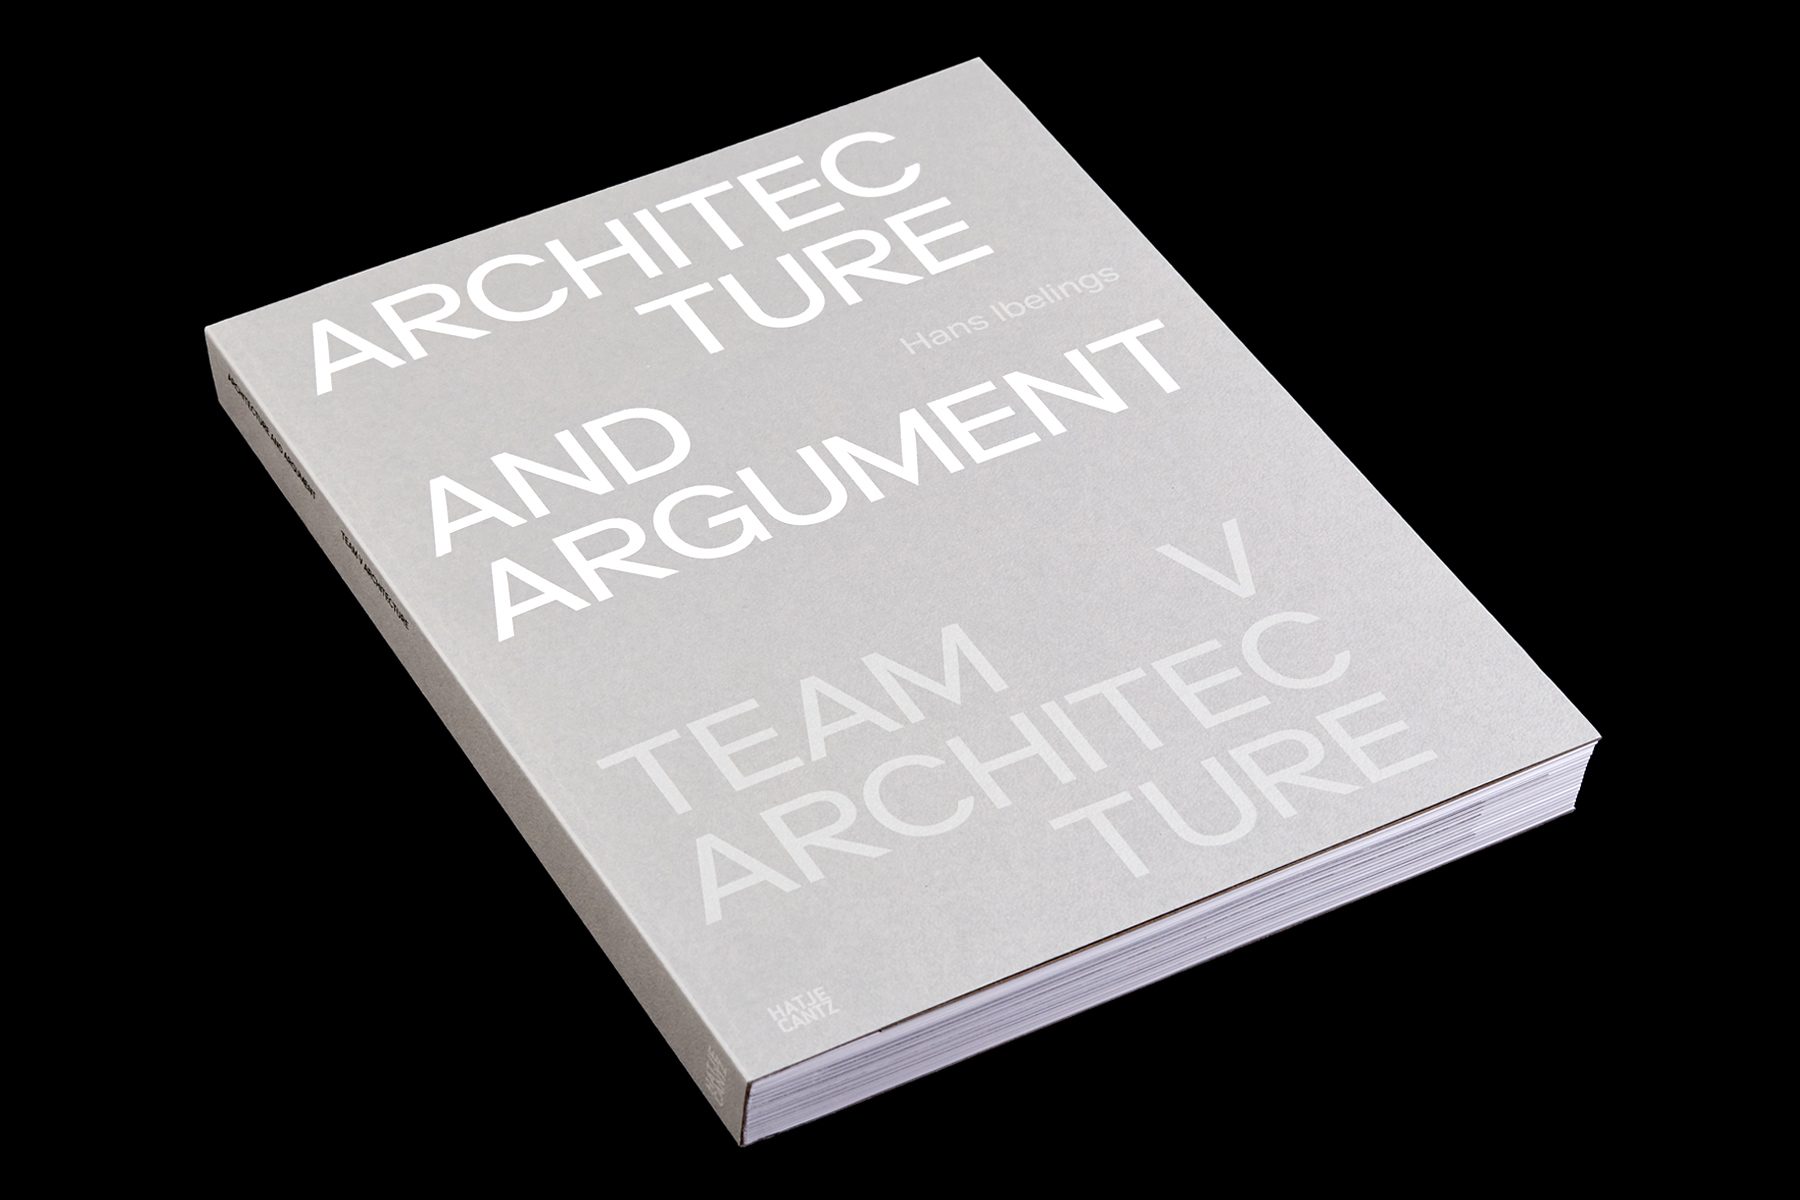 Team-V-Architecture_Architecture-and-Argument_2019_Dimitri-Jeannottat_1800x1200_1c